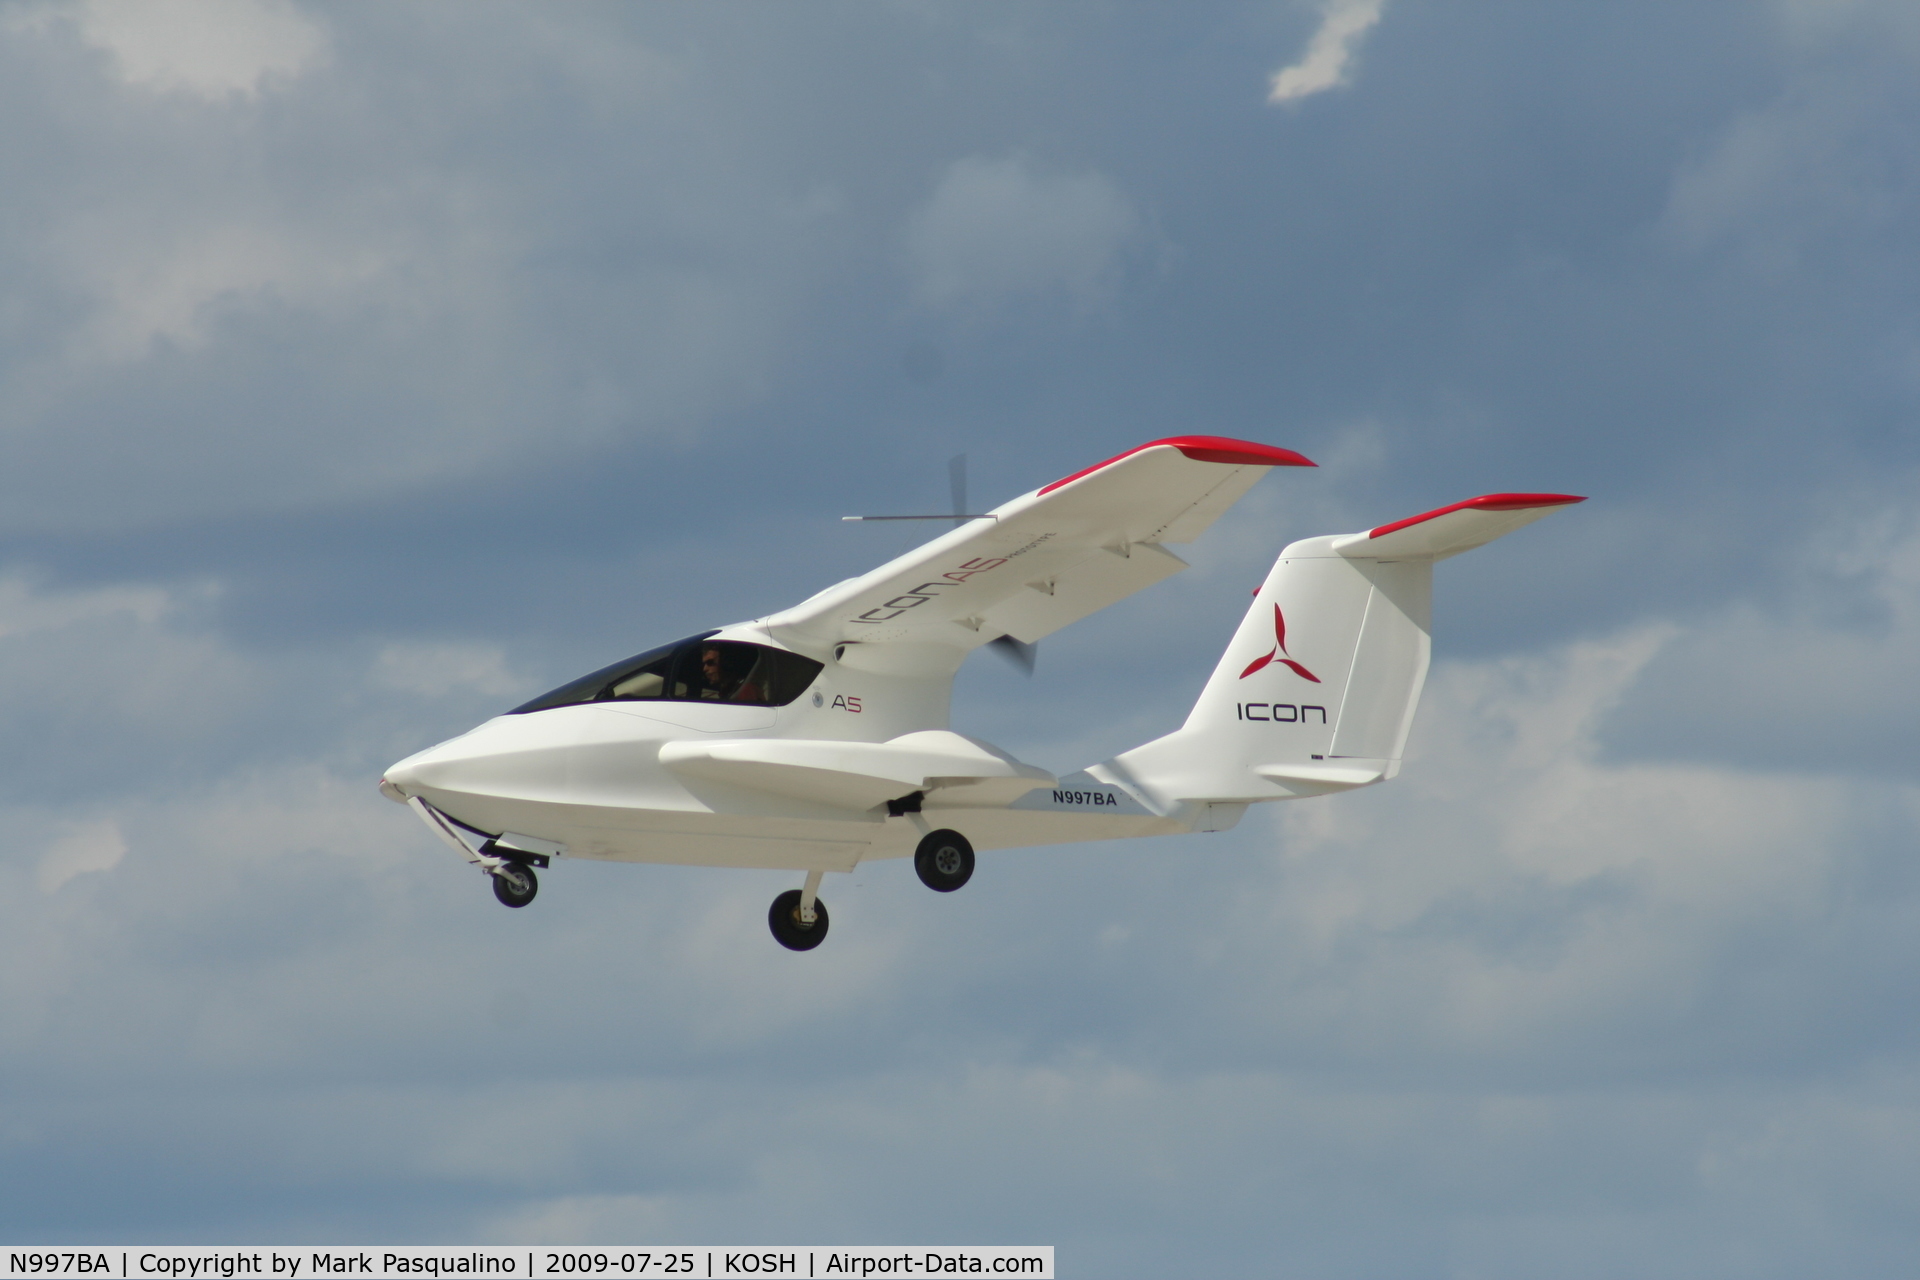 N997BA, 2008 ICON Aircraft A5 C/N 00001, A5-POC